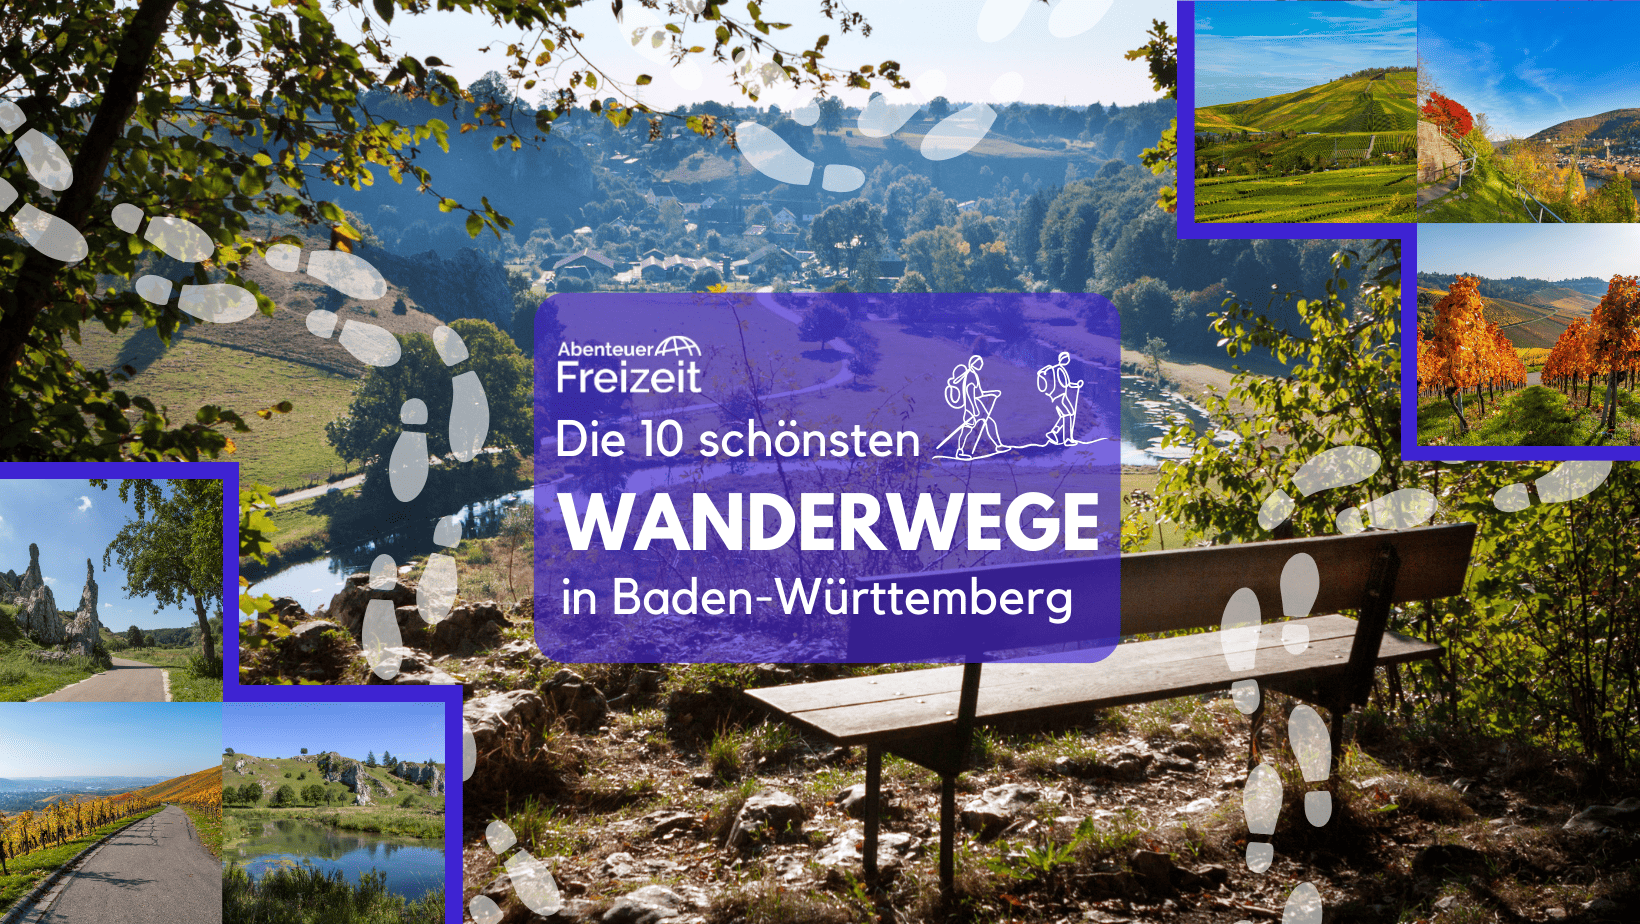 Die 10 schönsten Wanderwege in Baden-Württemberg - Wandern in Baden-Württemberg